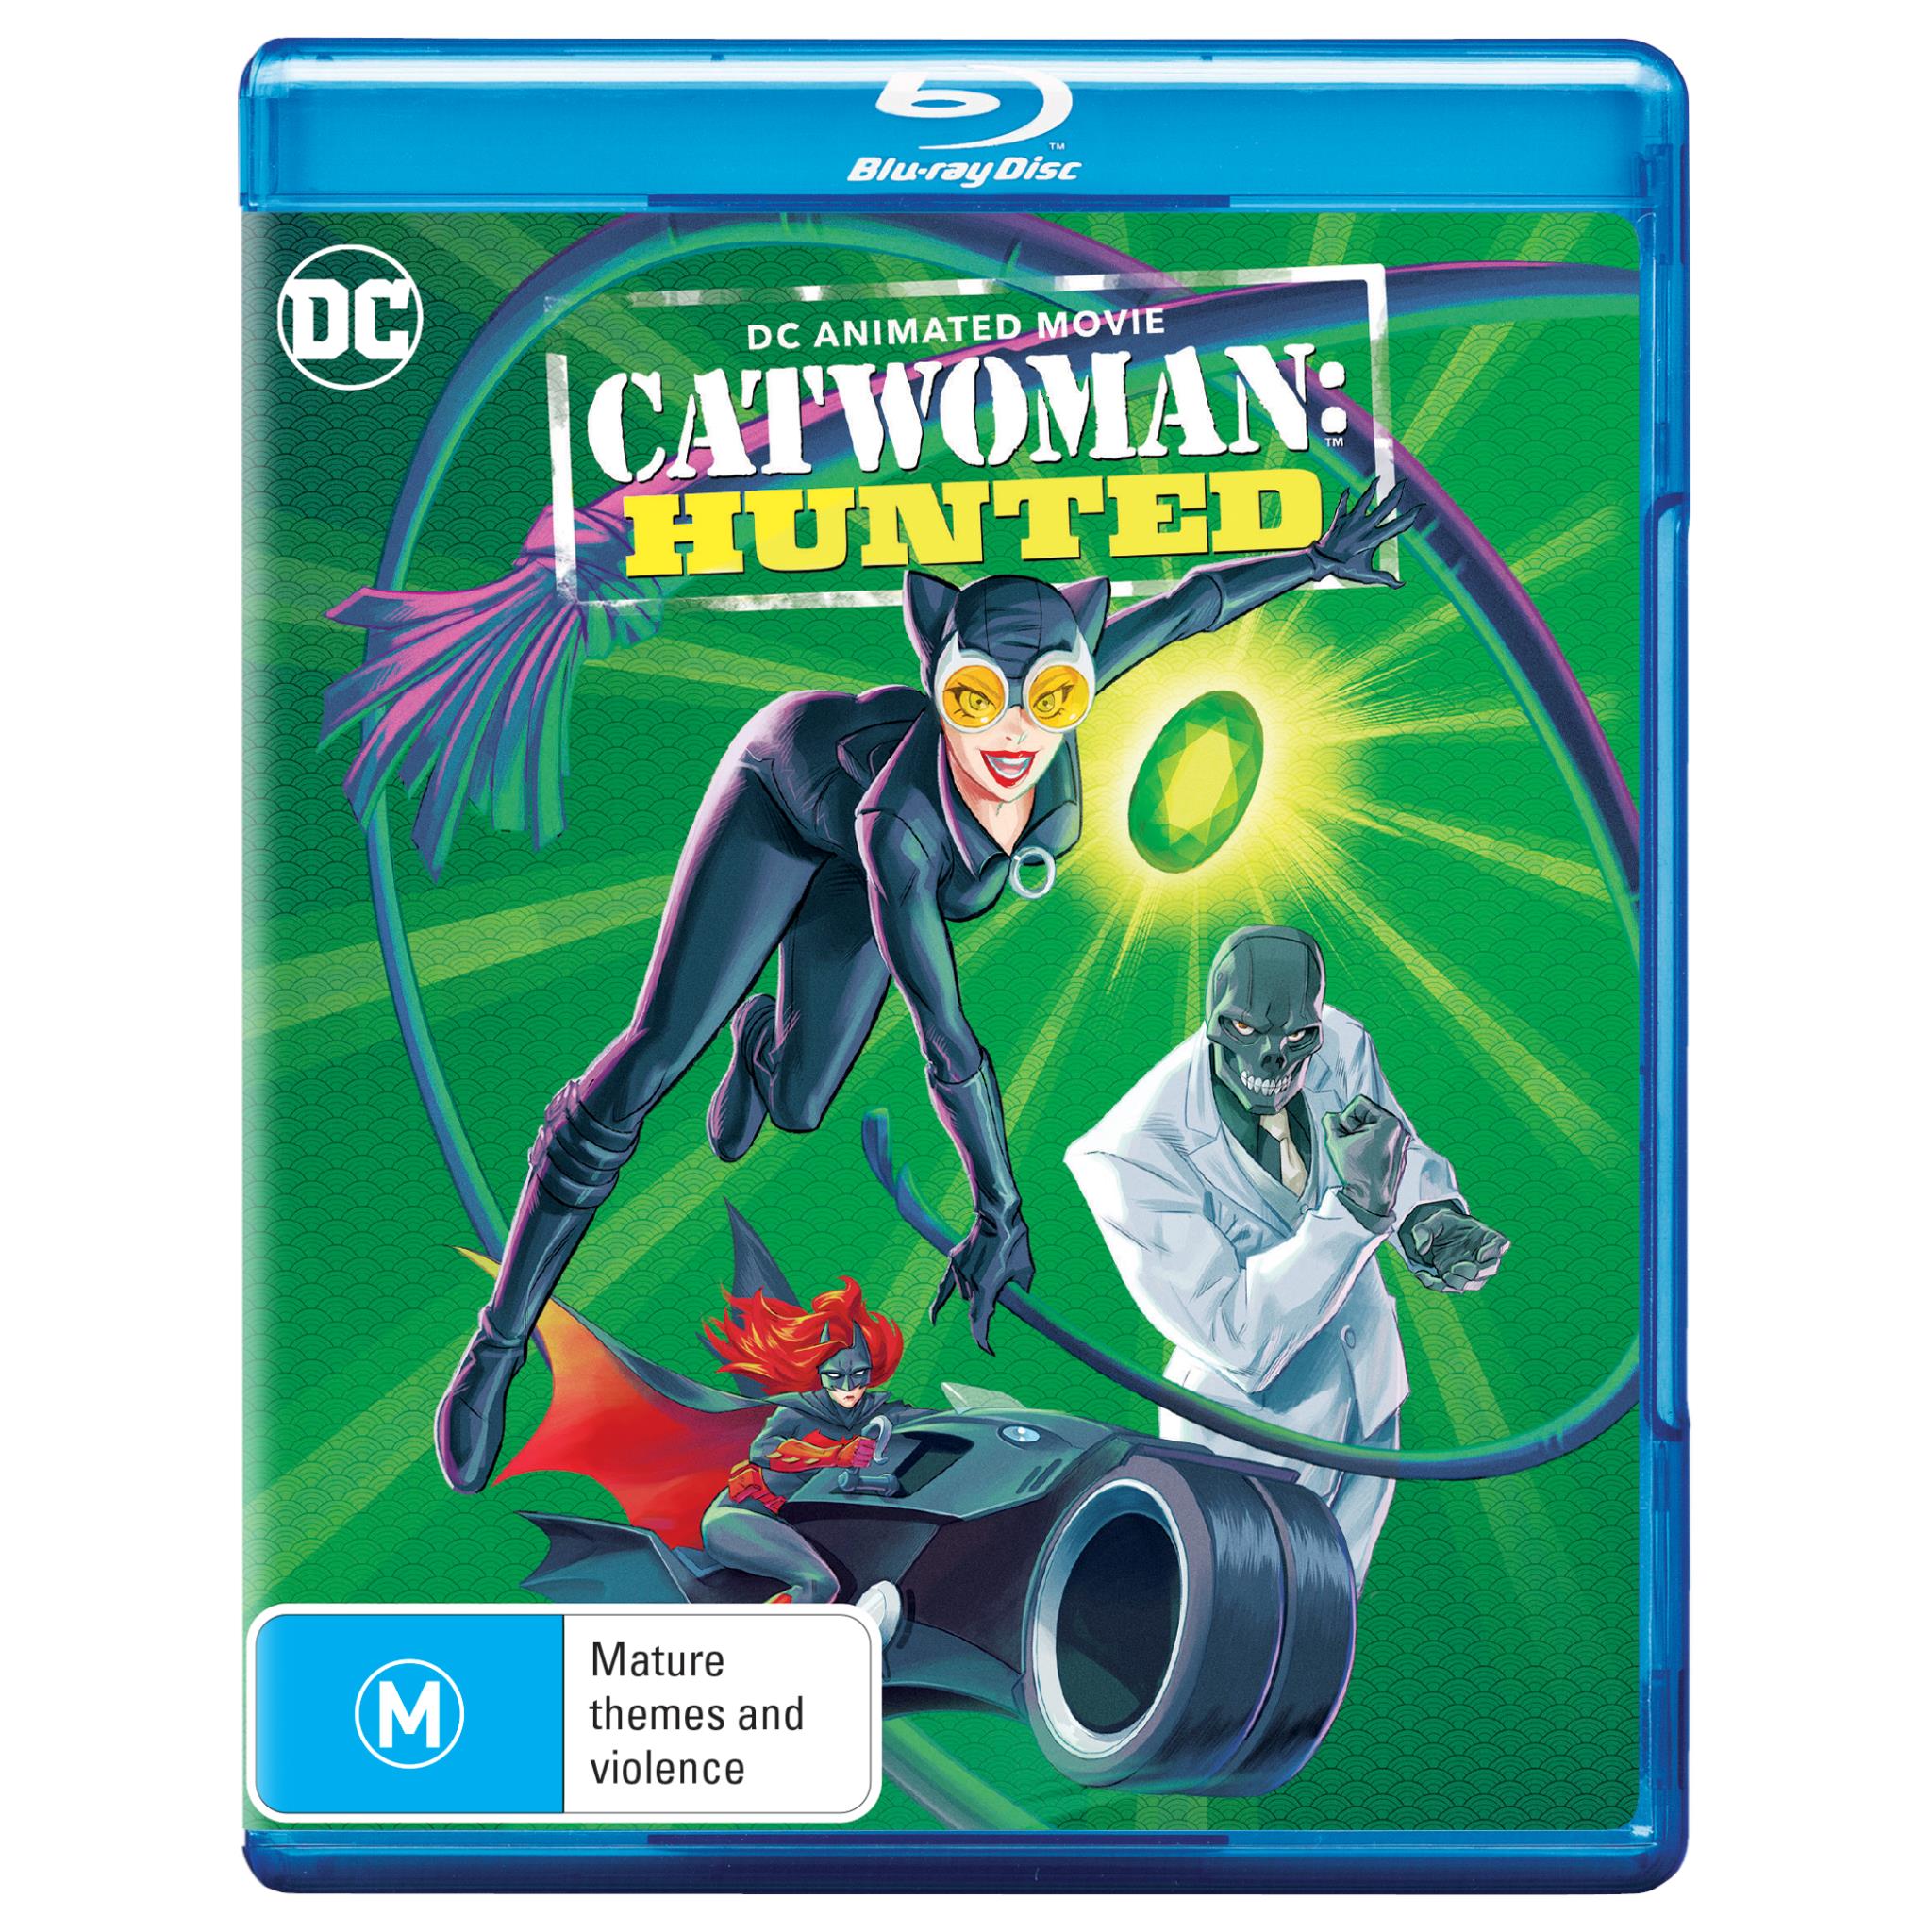 Catwoman: Hunted – RazorFine Review